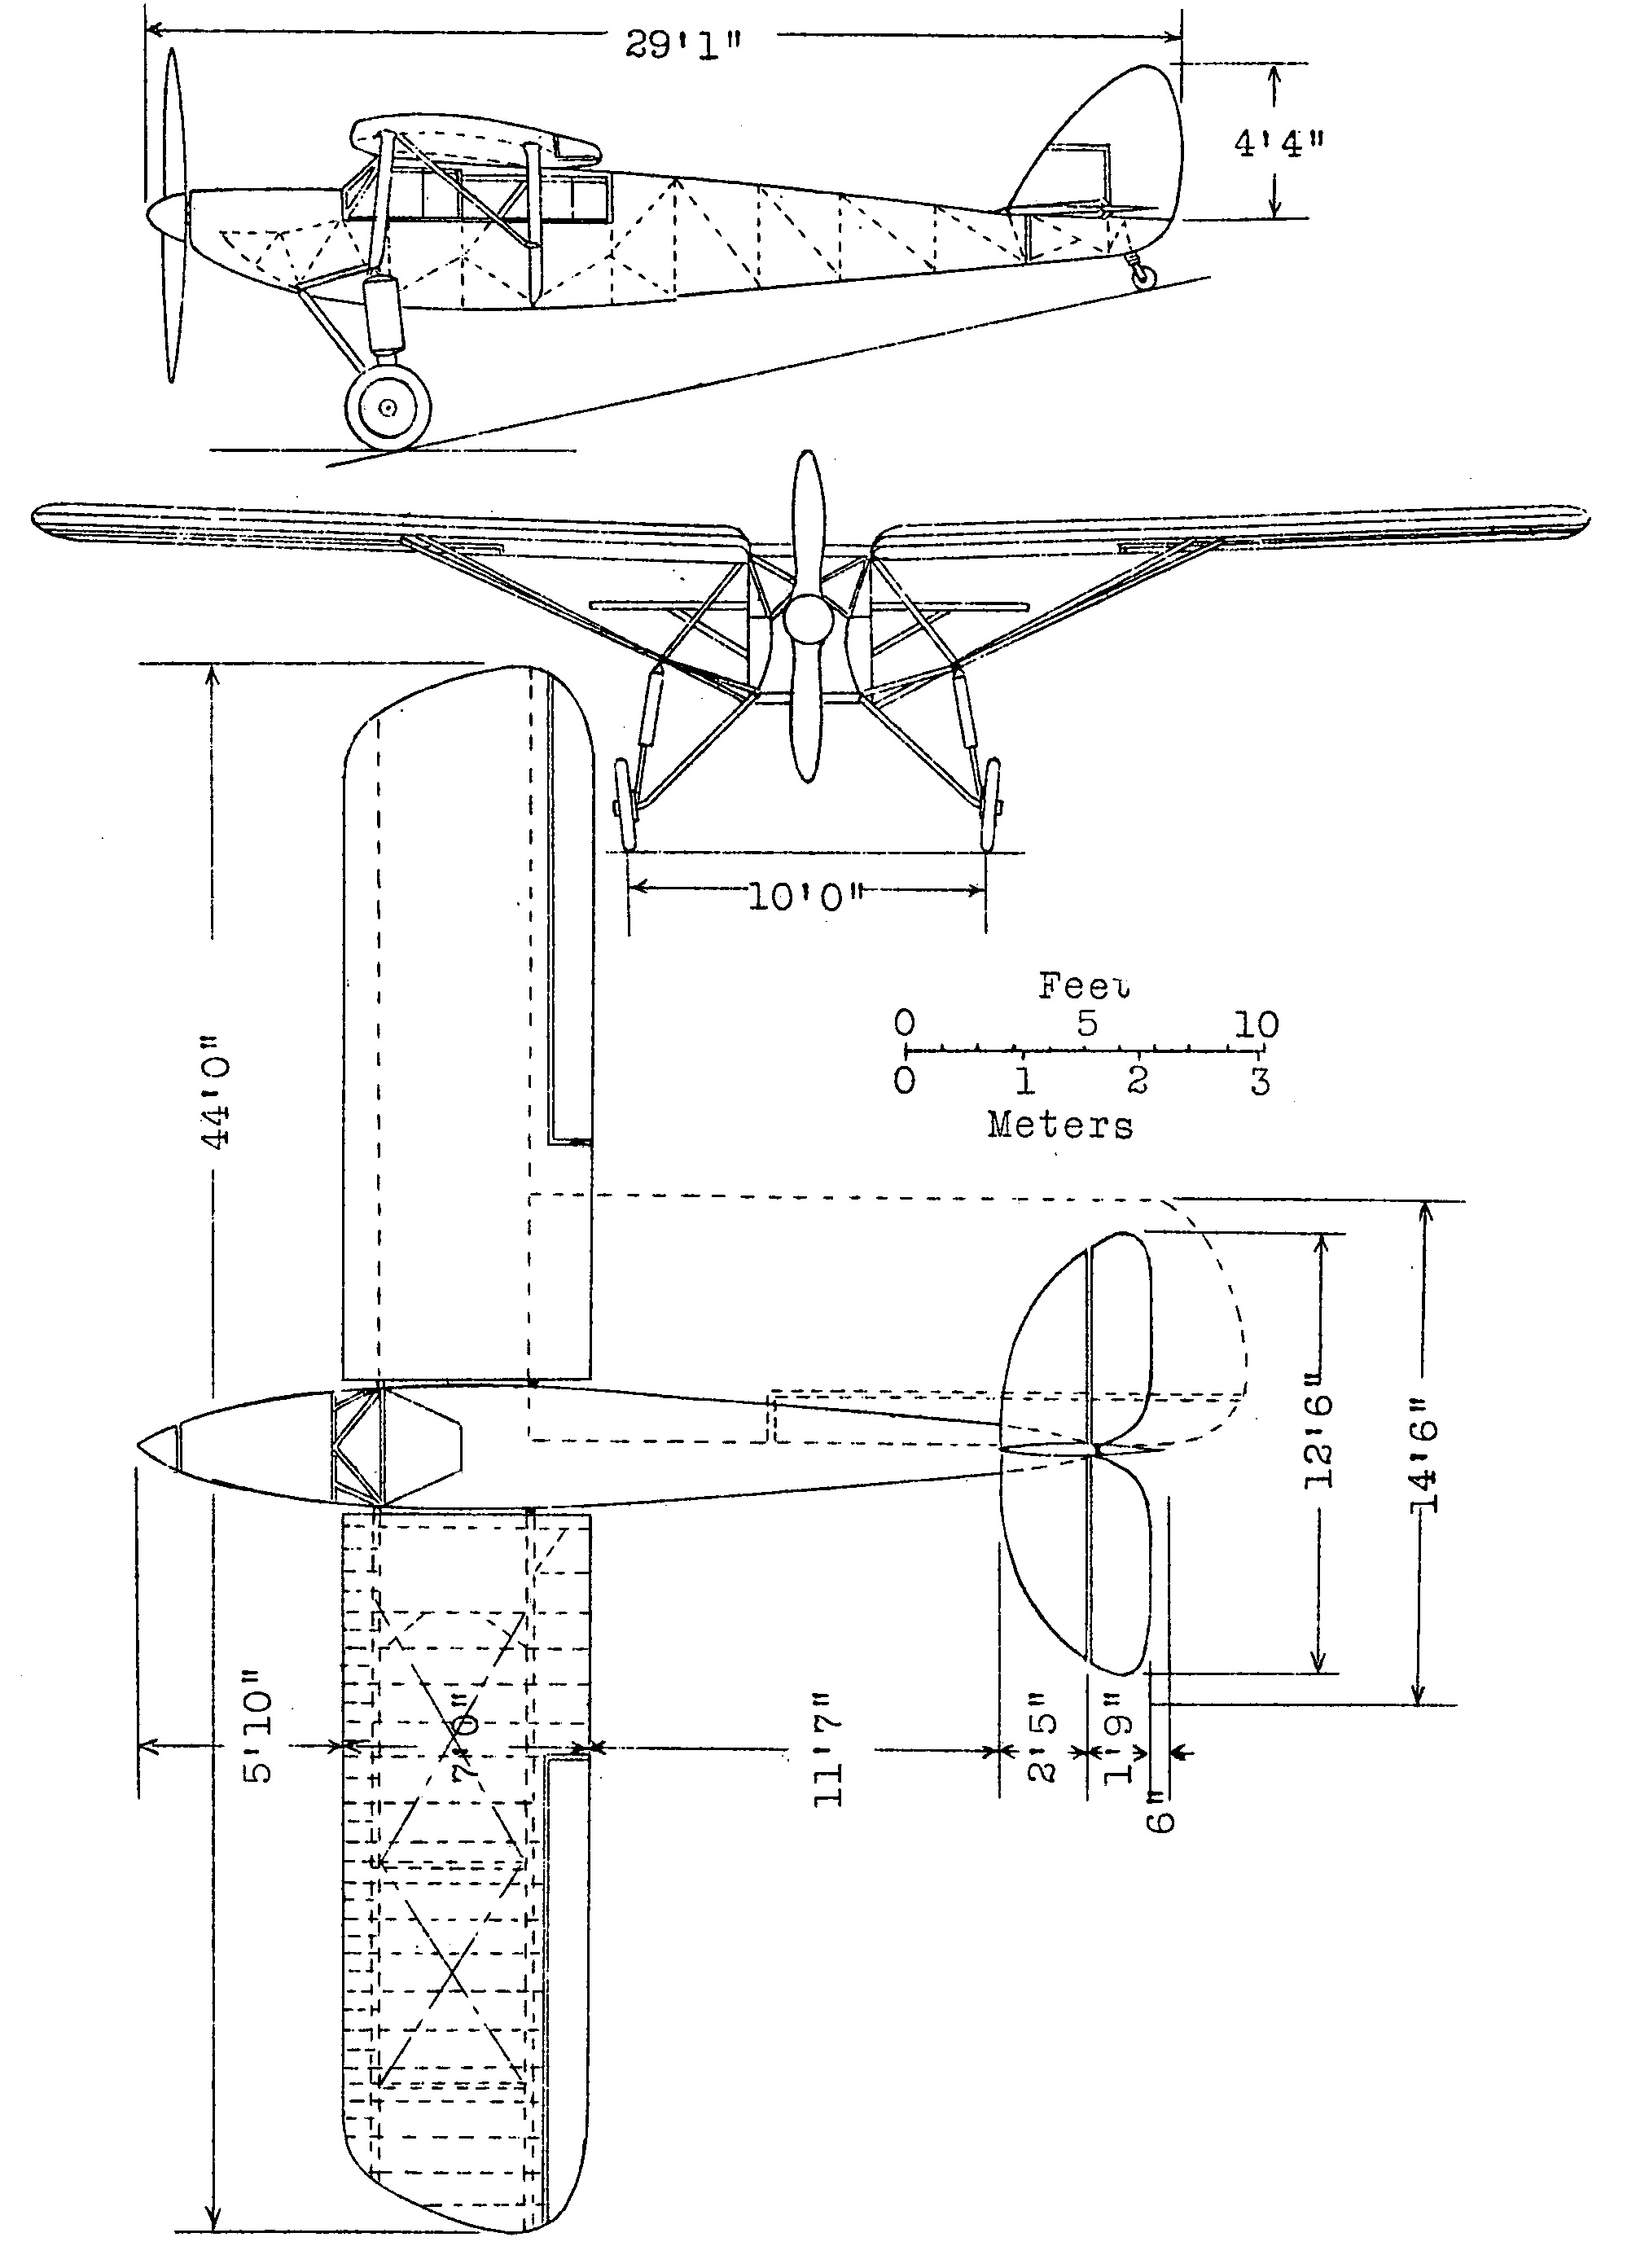 de Havilland Hawk Moth blueprint